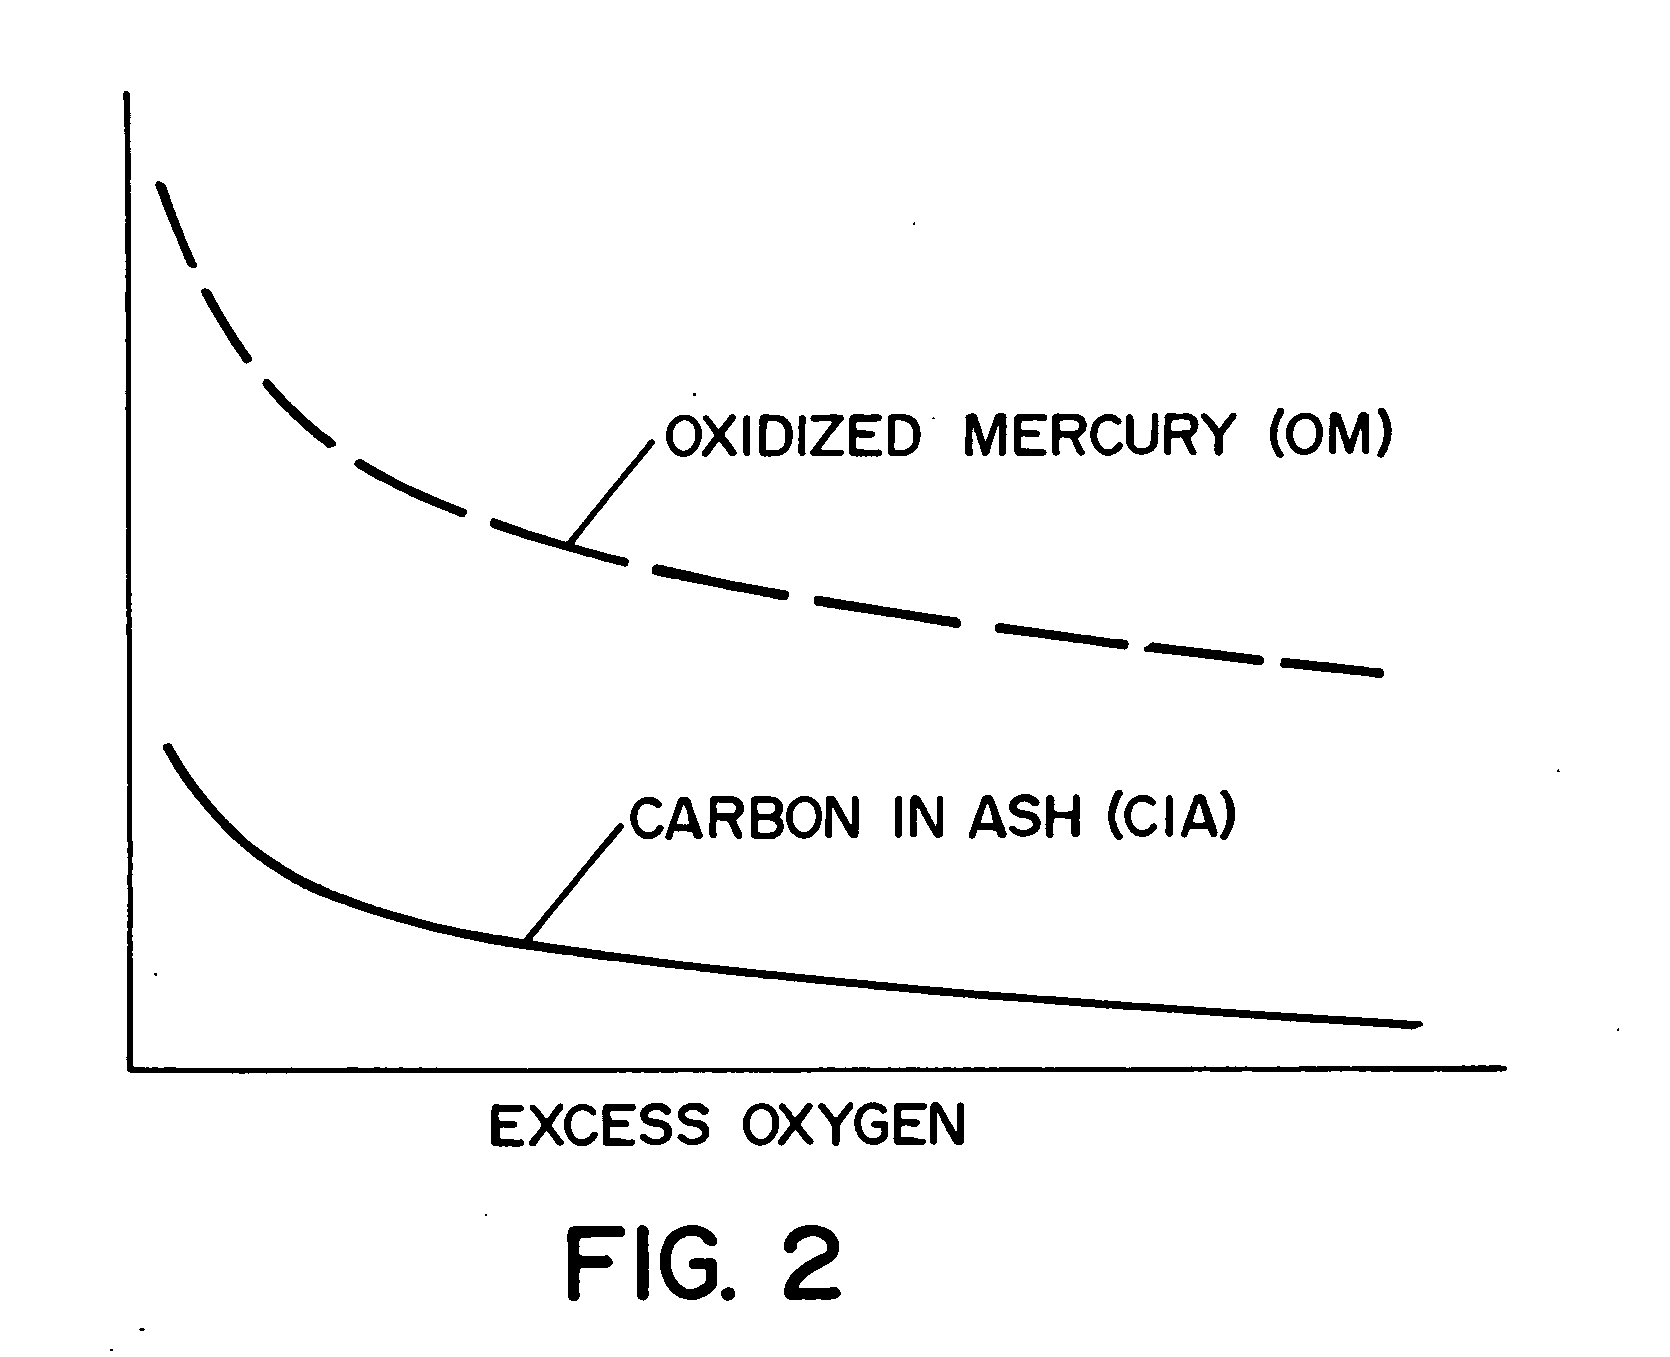 Model based control and estimation of mercury emissions